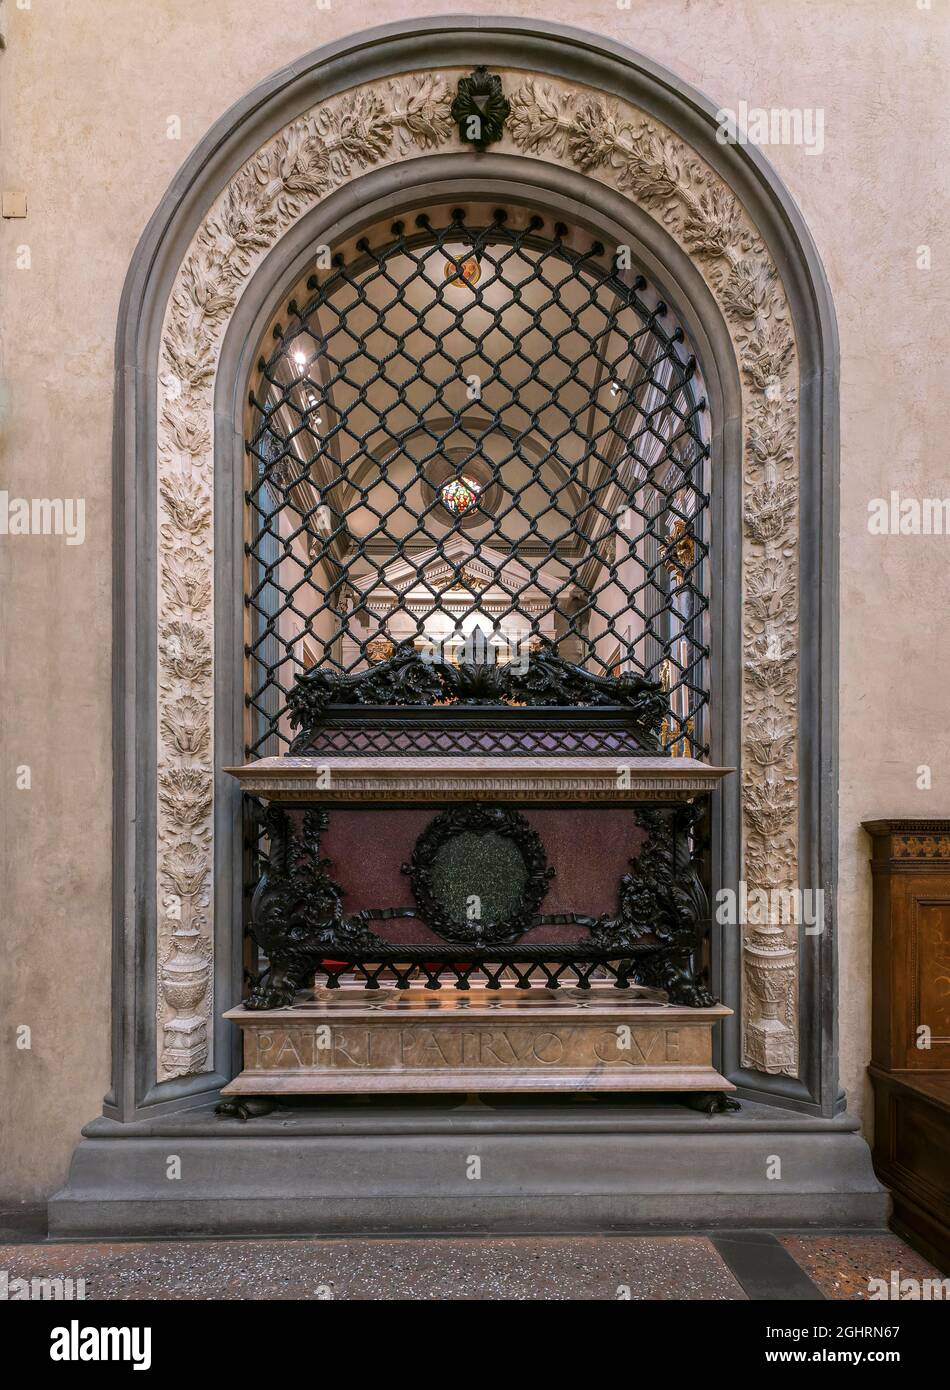 Double tombe de Gionanni de' Medici et Piero di Cosimo de' Medici, 1469-72, sculpteur Andrea Verrochio, Sagrestia Vecchia, Old Sacristy, Renaissance Banque D'Images